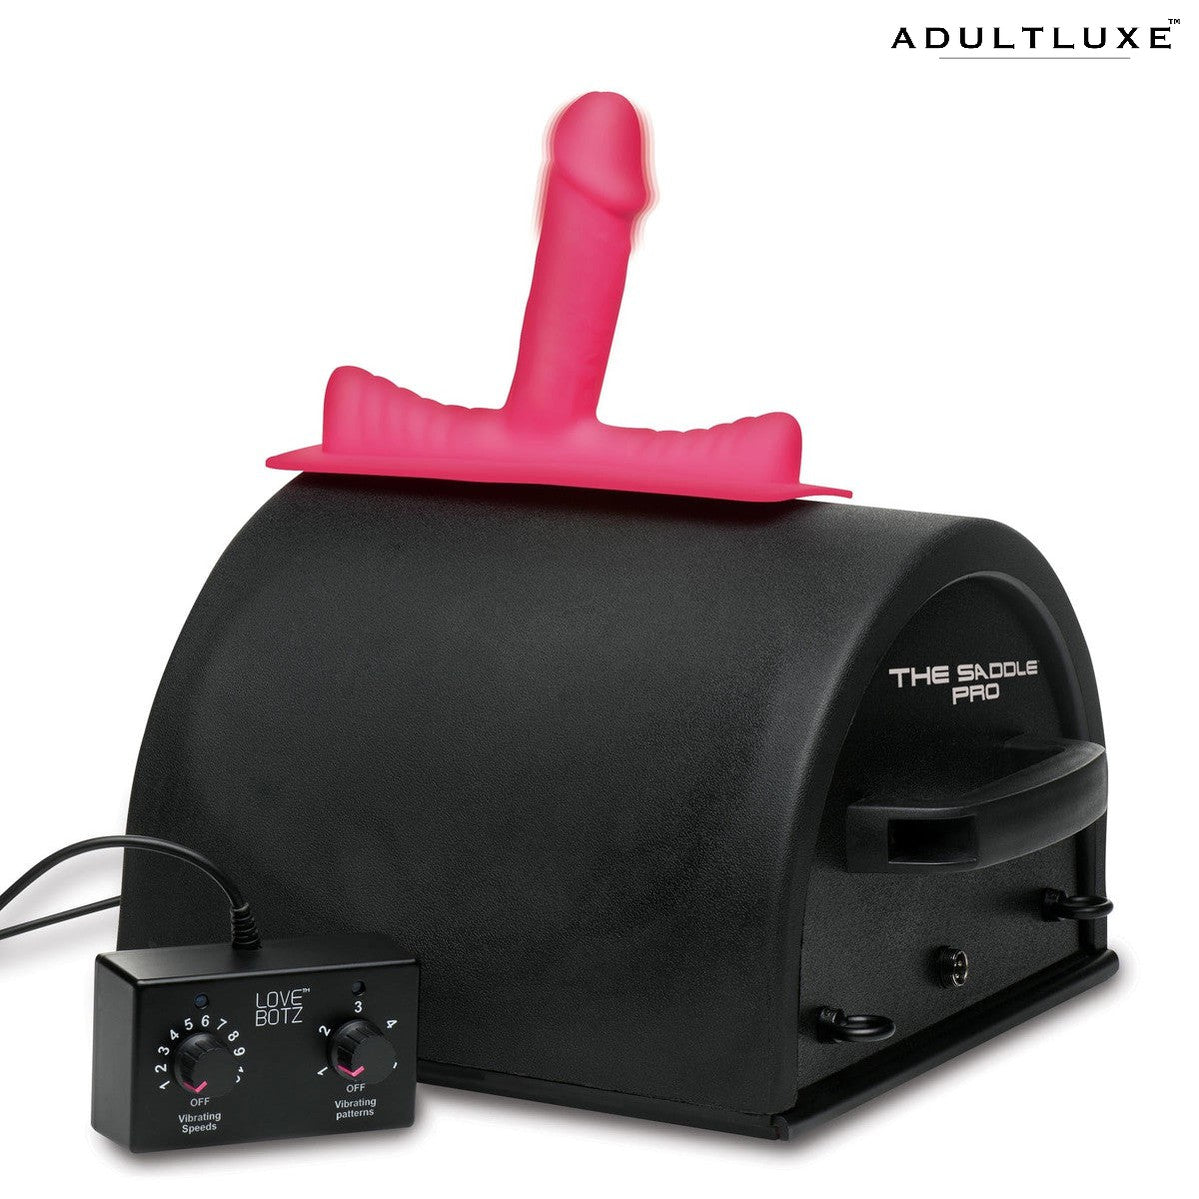 LoveBotz 50x Saddle Pro Sex Machine With 4 Attachments